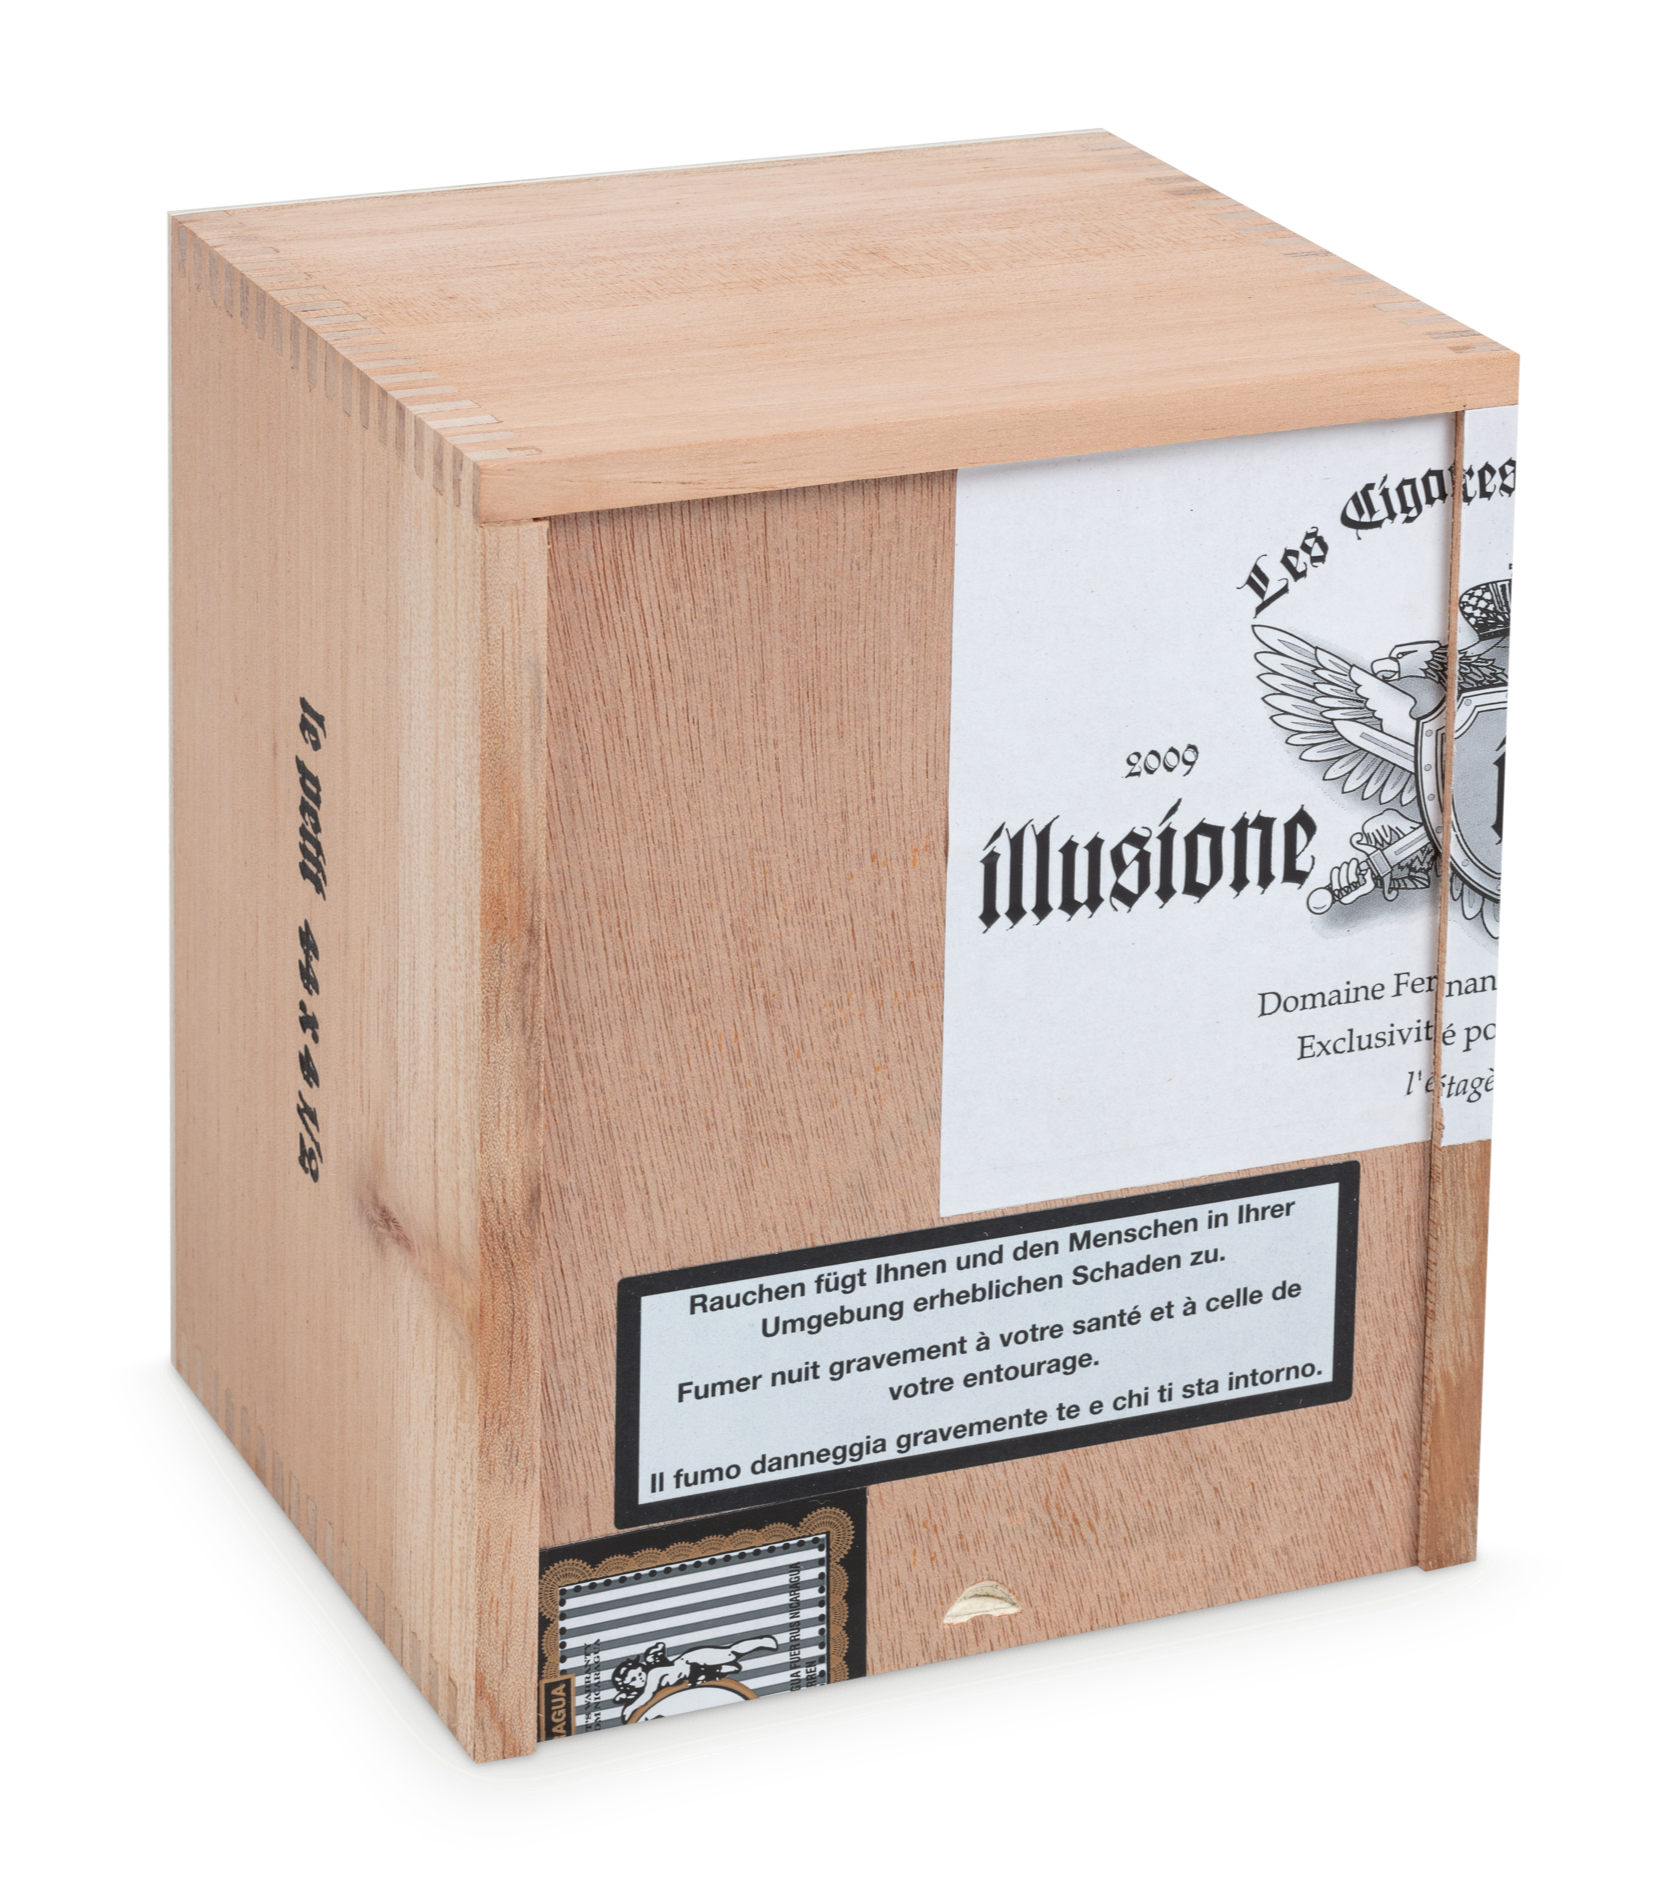 25er Kiste Illusione Epernay Le Petit Zigarren, Box verschlossen